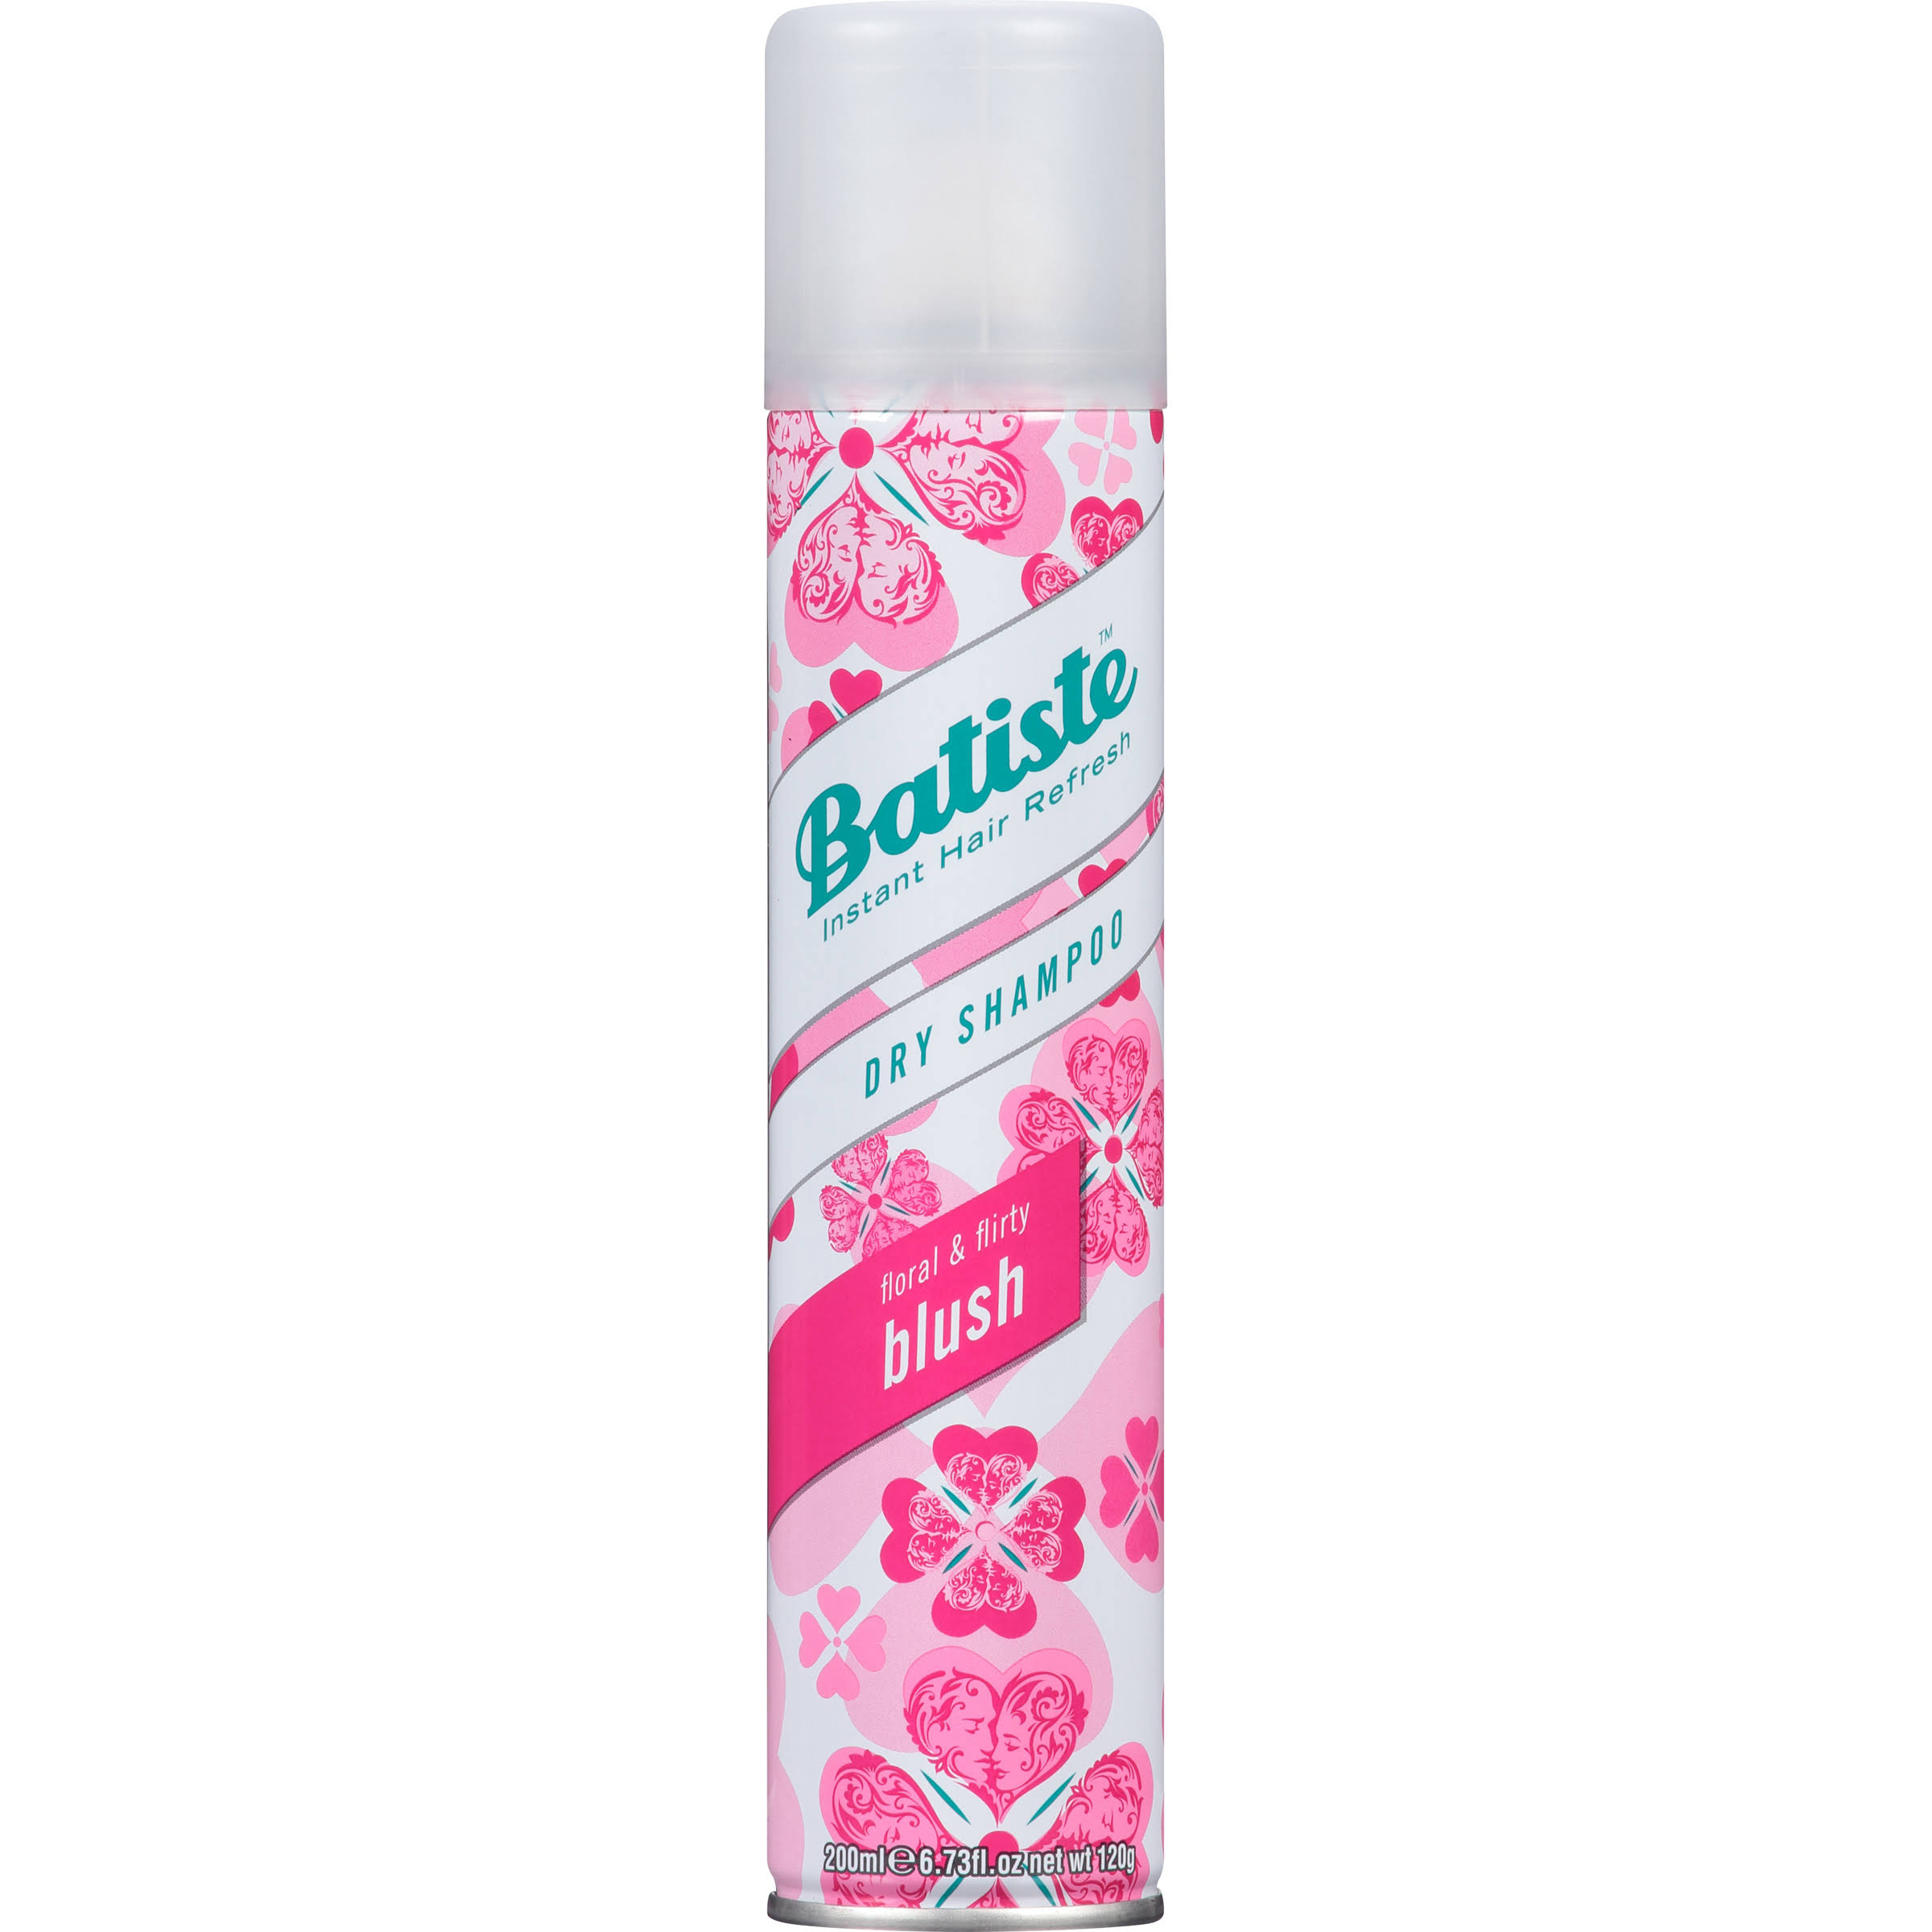 Batiste Dry Shampoo - Floral Flirty Blush, 200ml